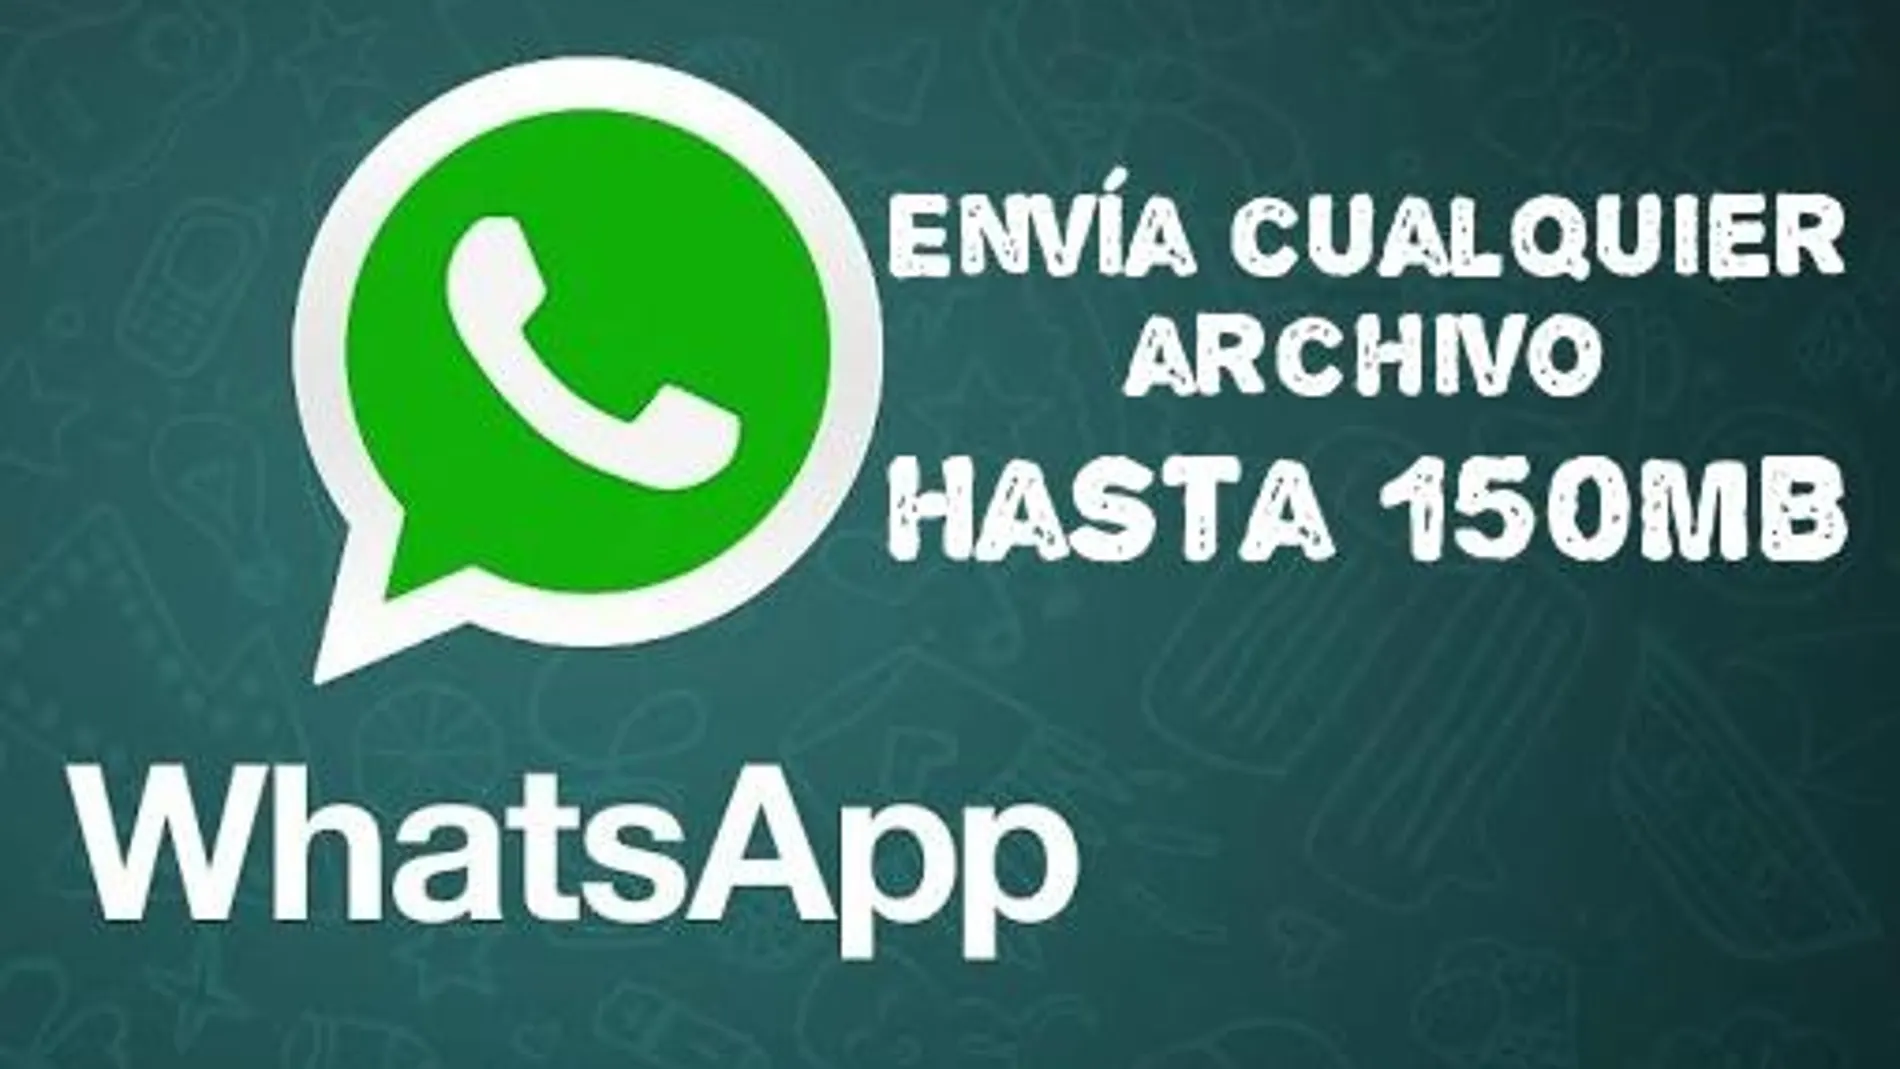 Envía archivos de hasta 150 MB por Whatsapp gracias a WaSend